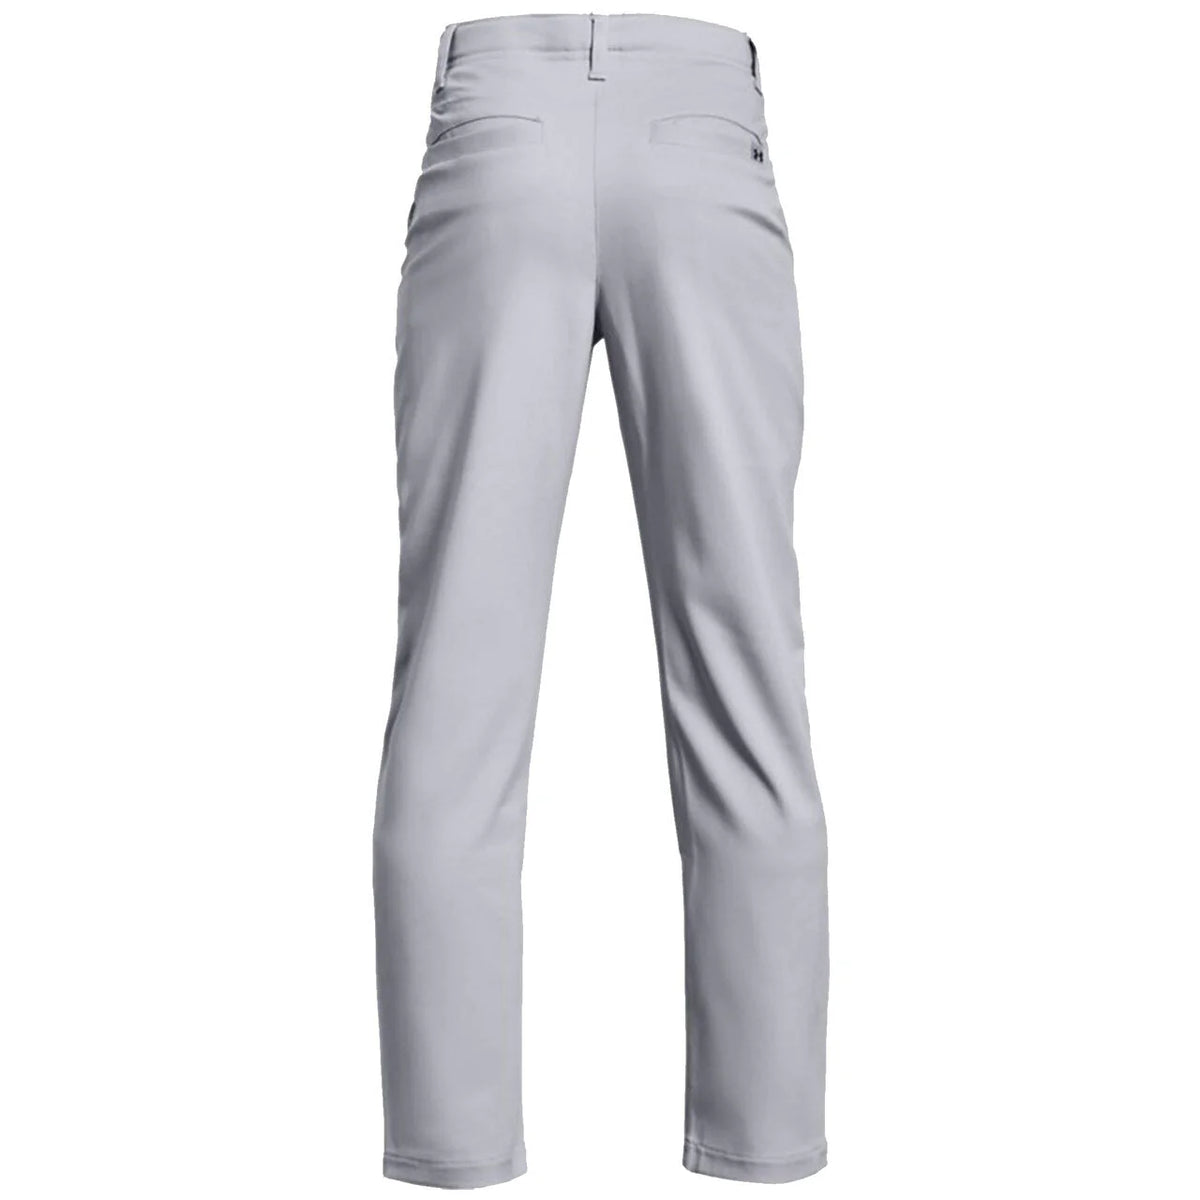 Under Armour Showdown Boys Golf Trousers - Mod Grey / Halo Grey